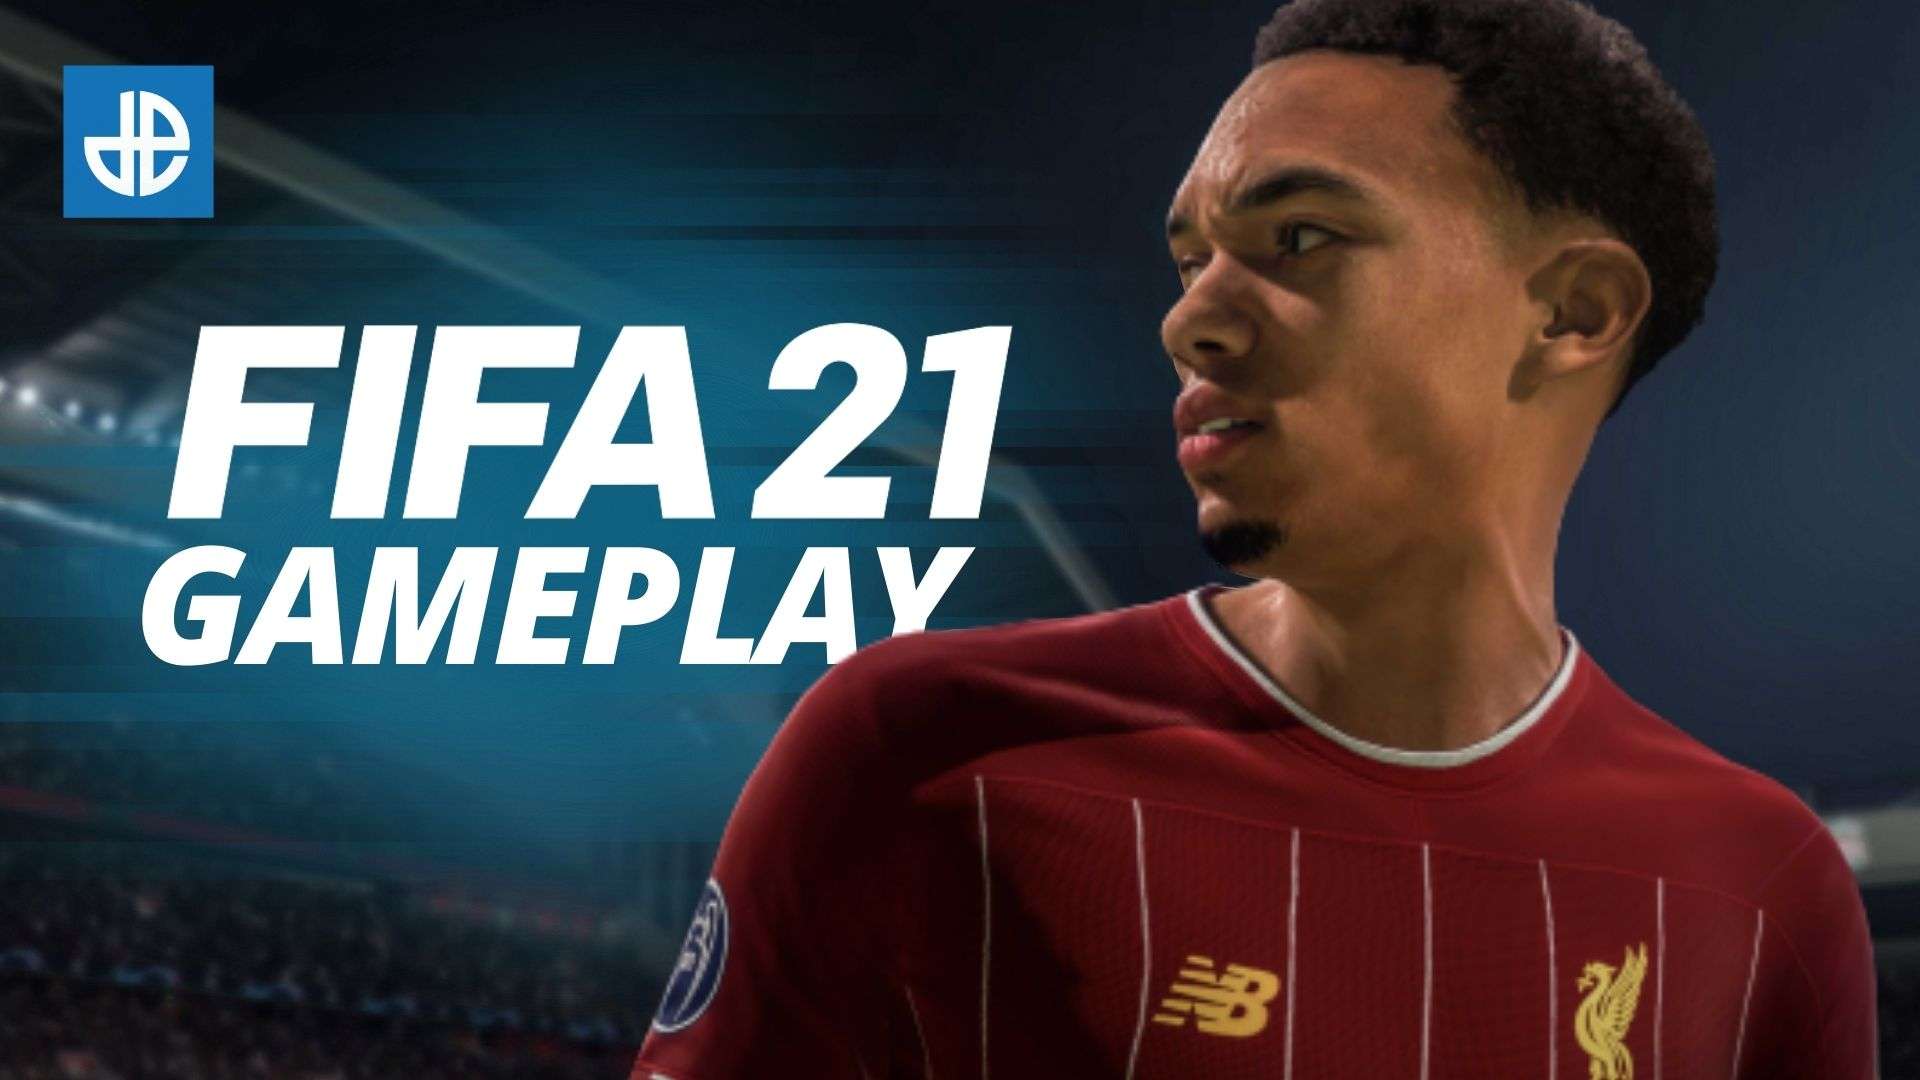 Alexander-Arnold in FIFA 21 gameplay